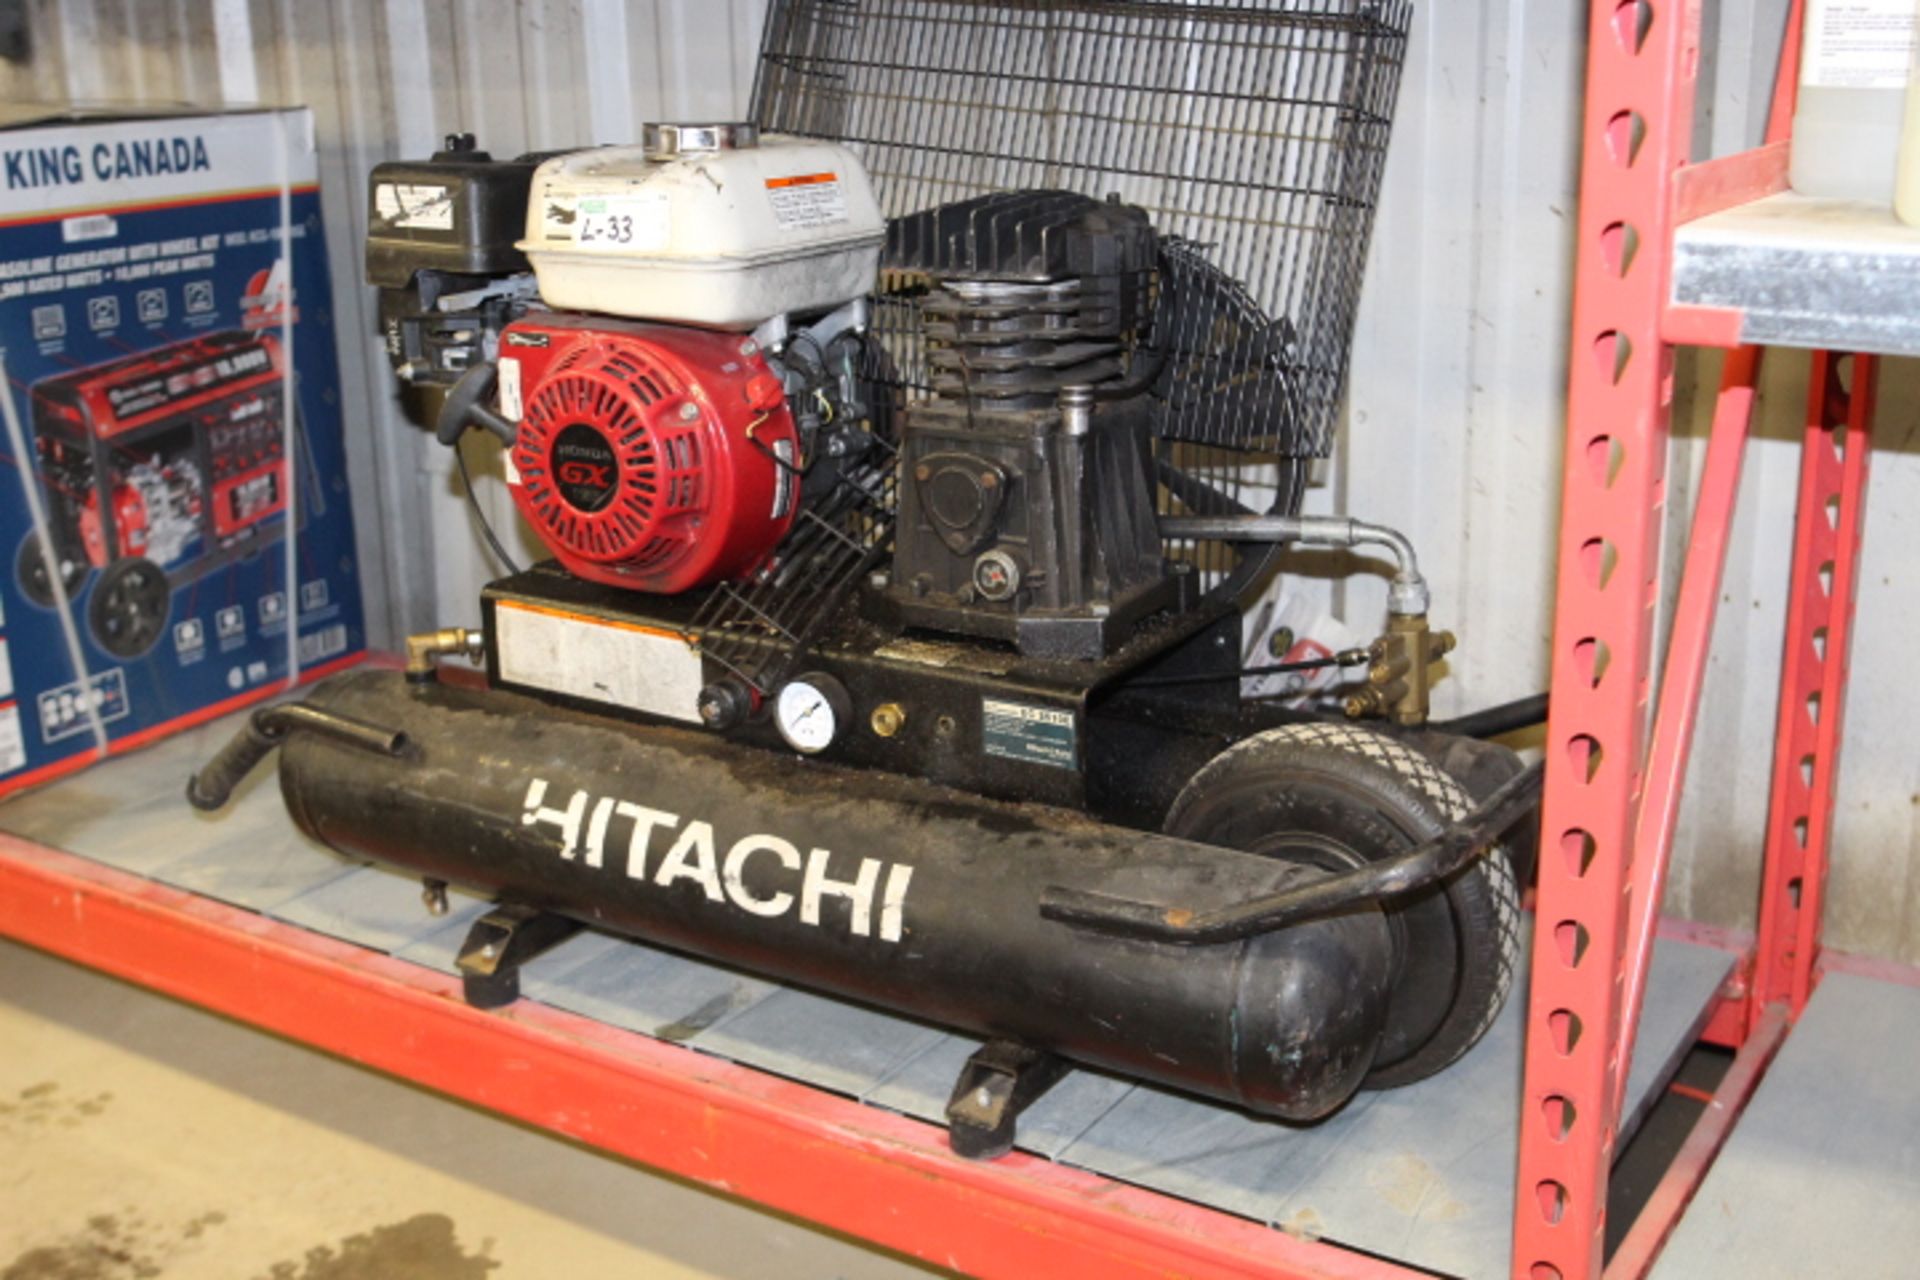 HITACHI MOBILE GAS POWERED AIR COMPRESSOR - Image 2 of 2